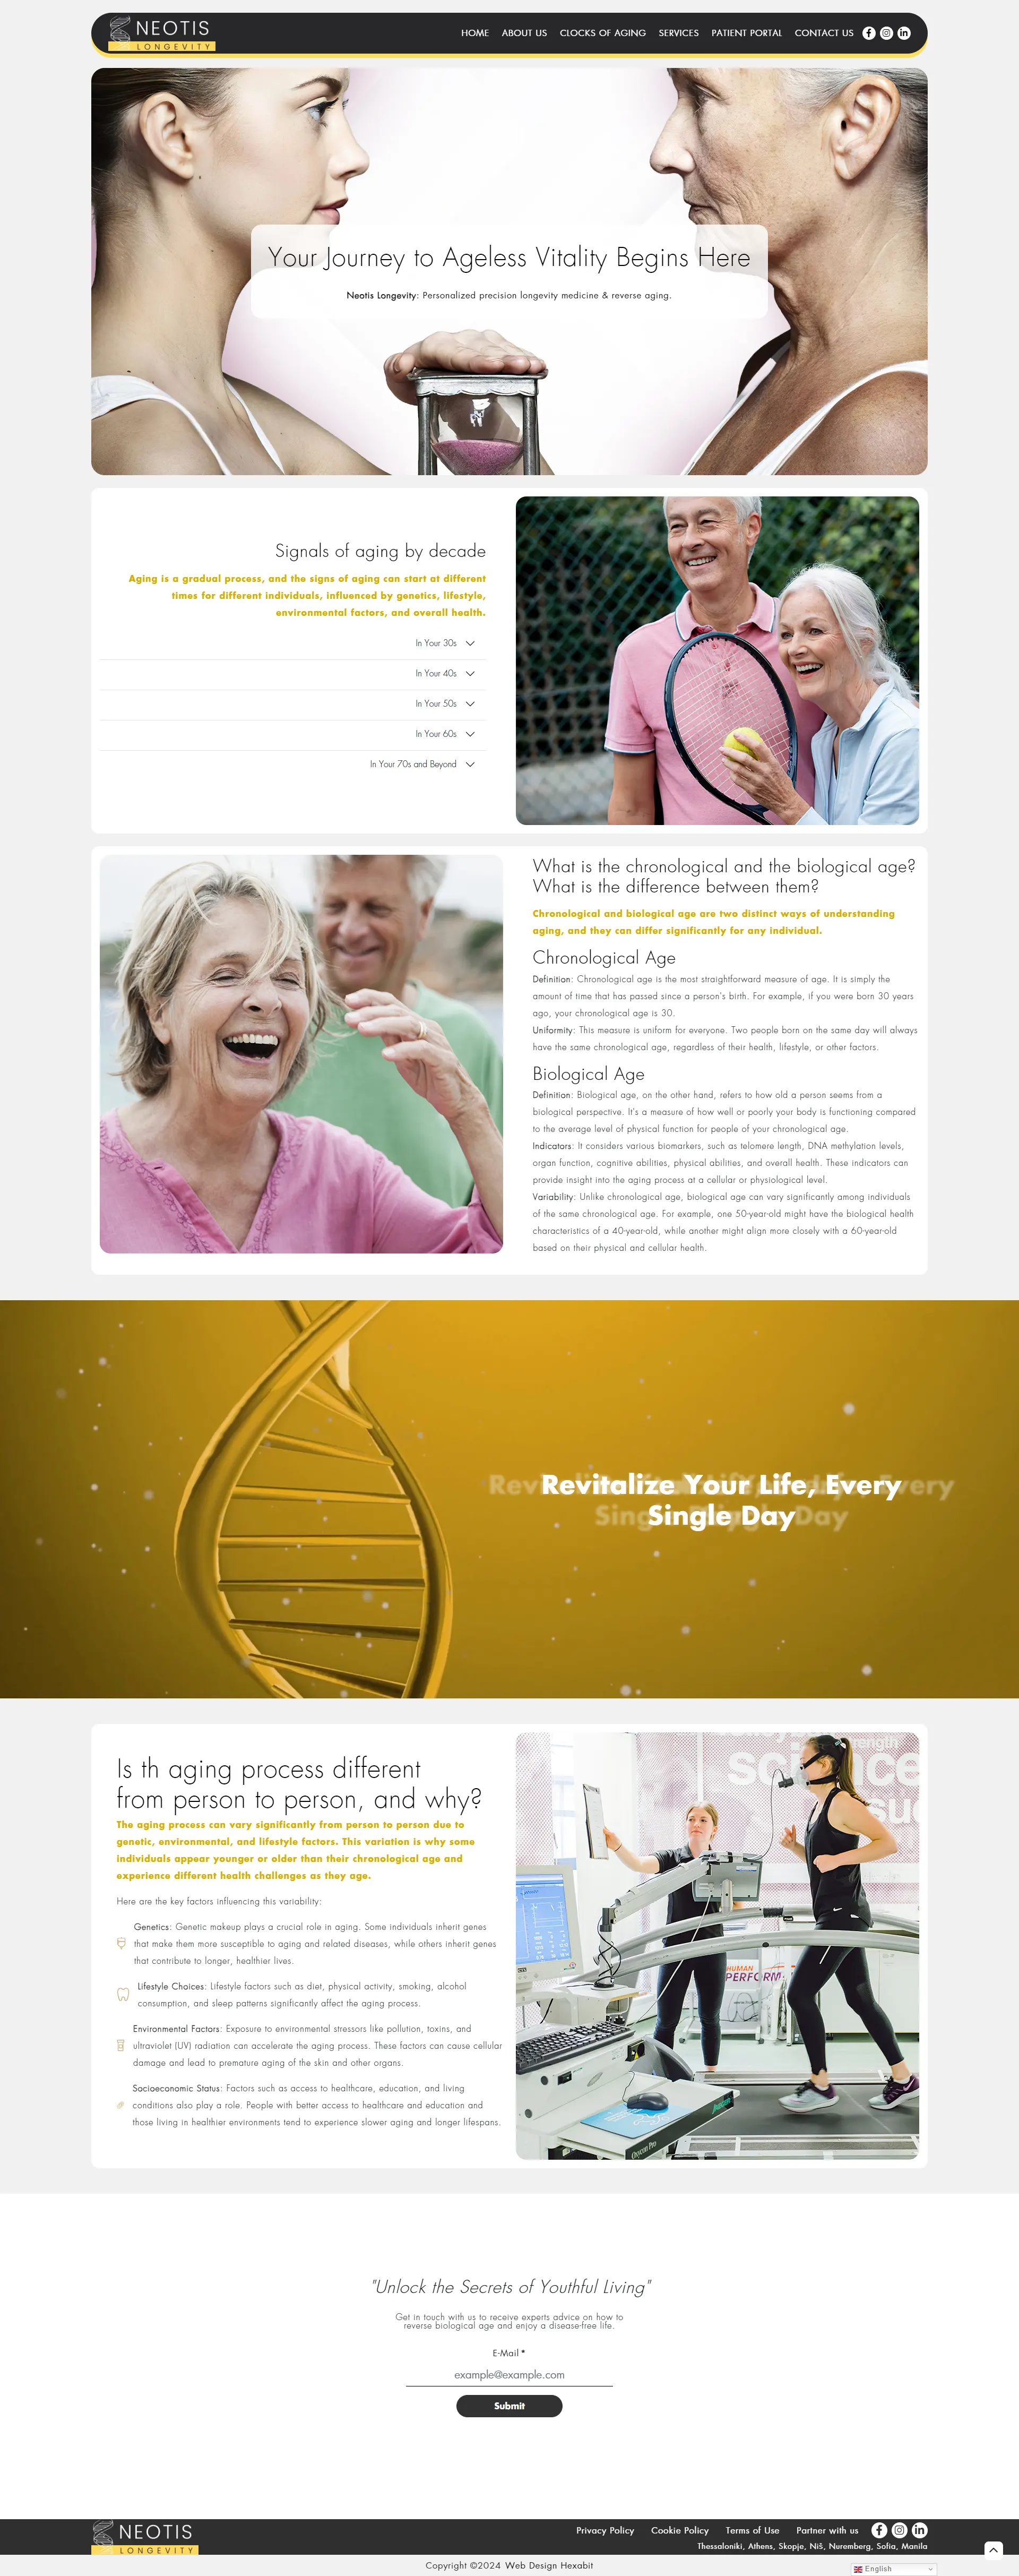 Hexabit web design - Neotis Life - Longevity